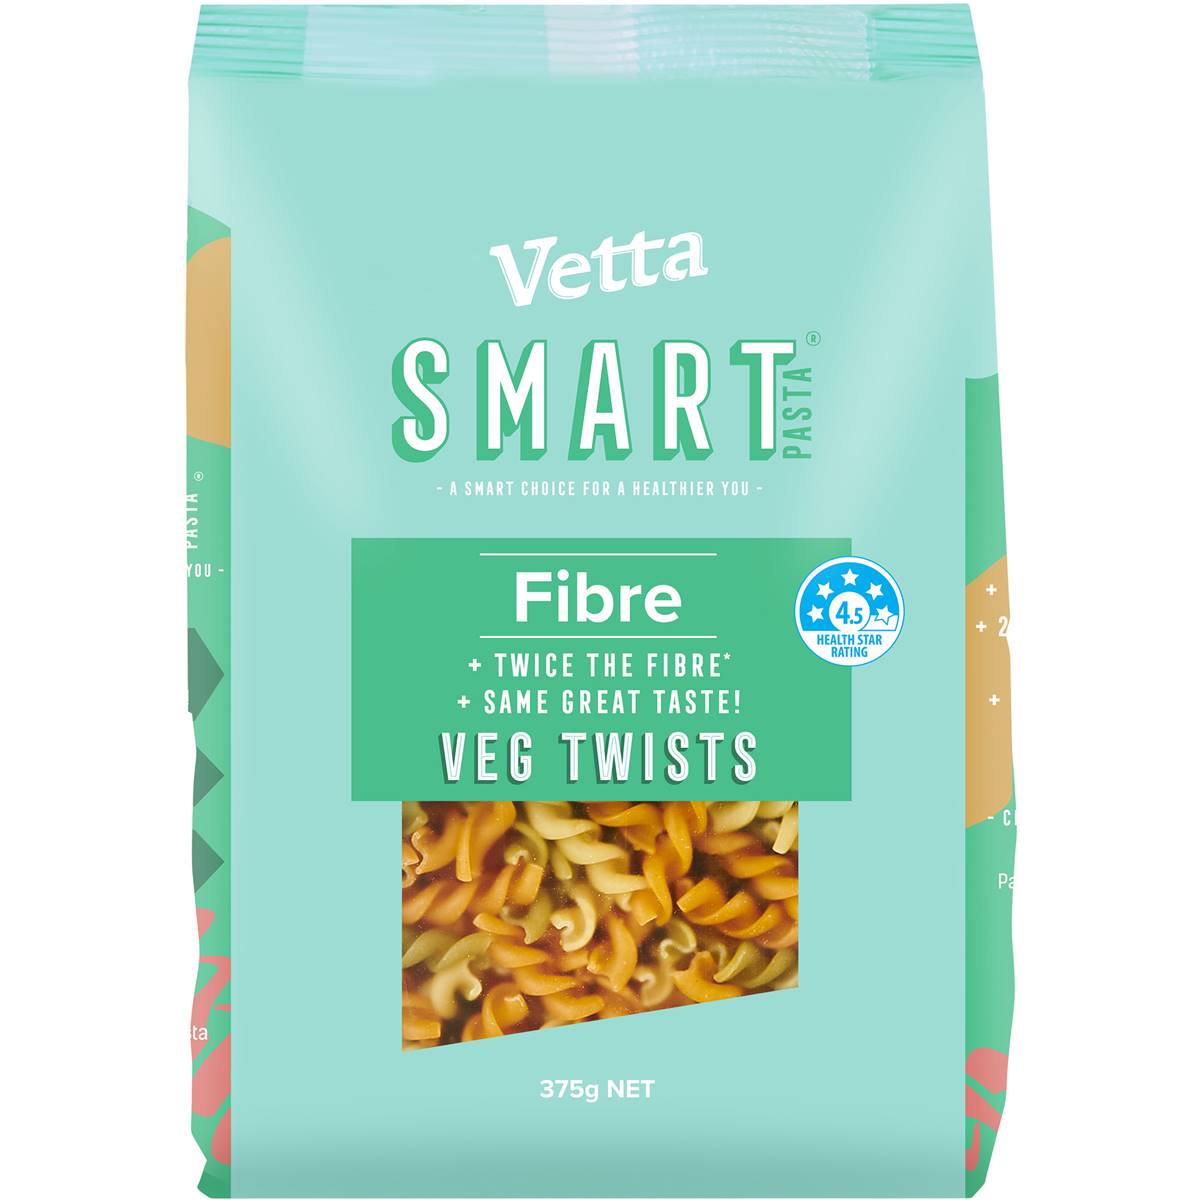 Calories in Vetta Smart Fibre Veg Twists Spirals Pasta